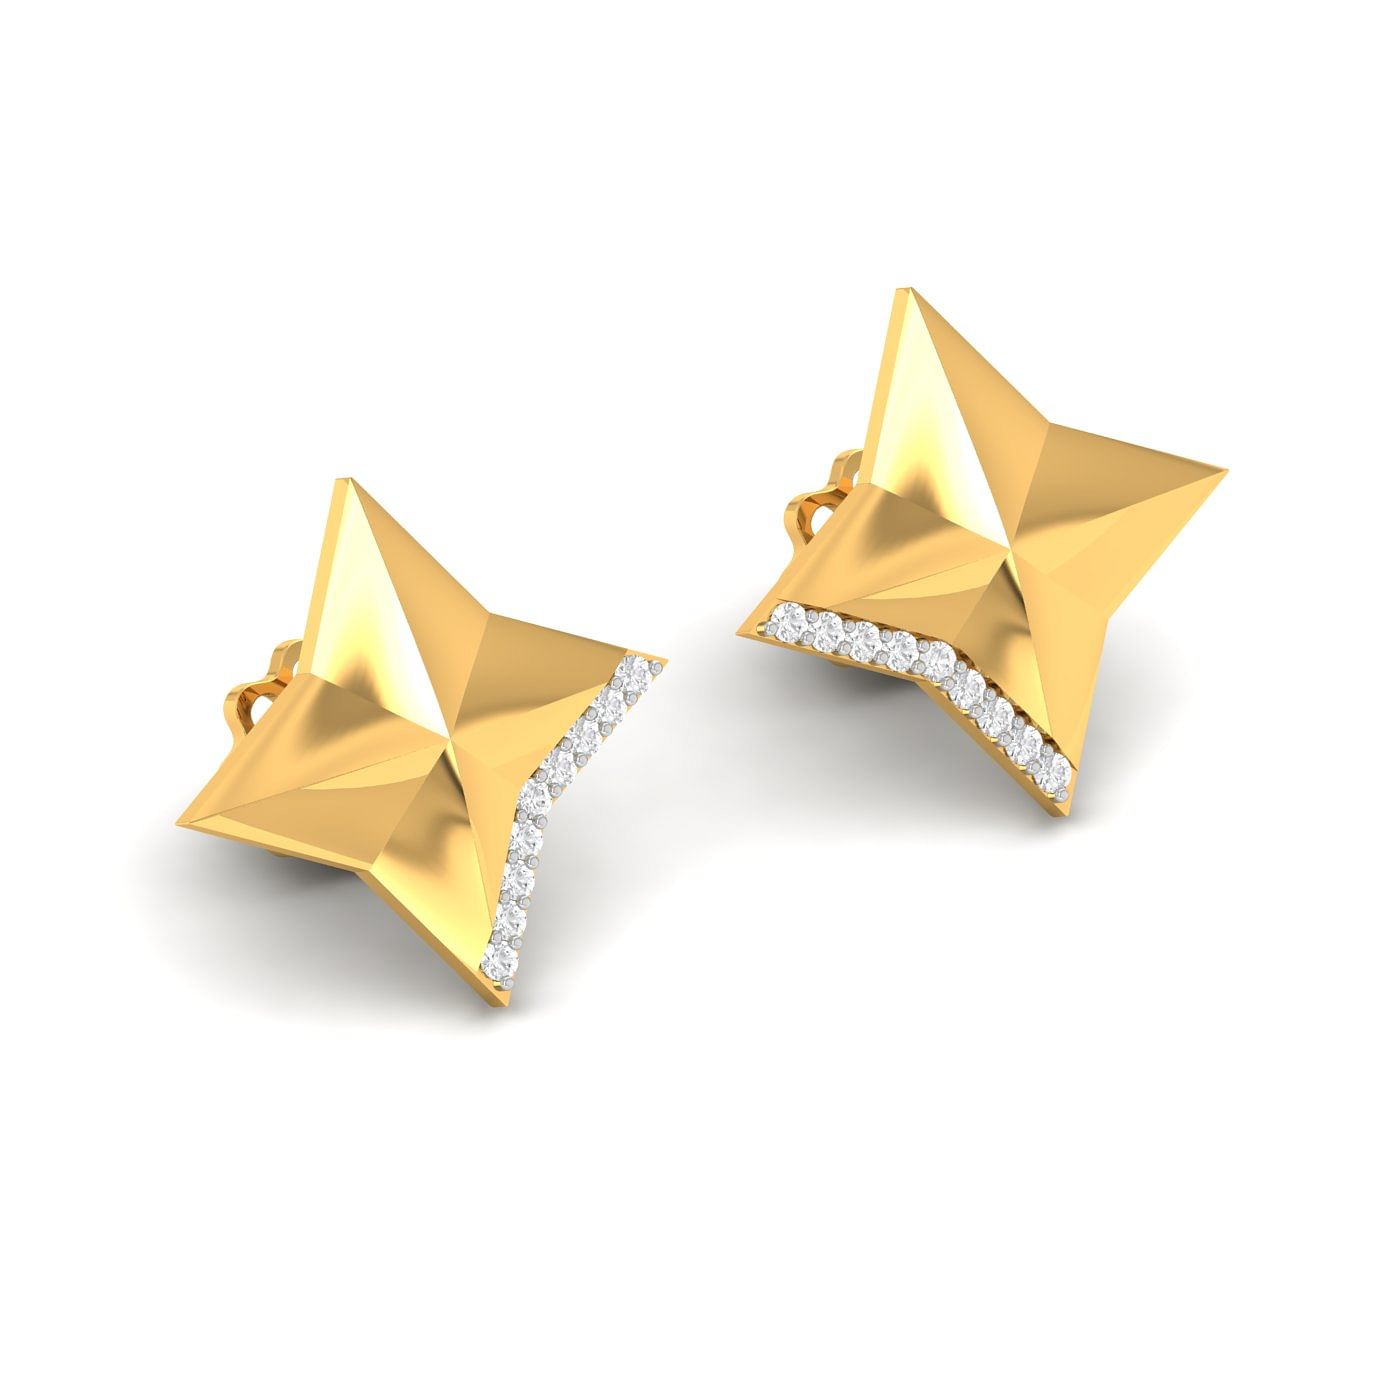 Yellow gold Latest Design Diamond Studs Earring